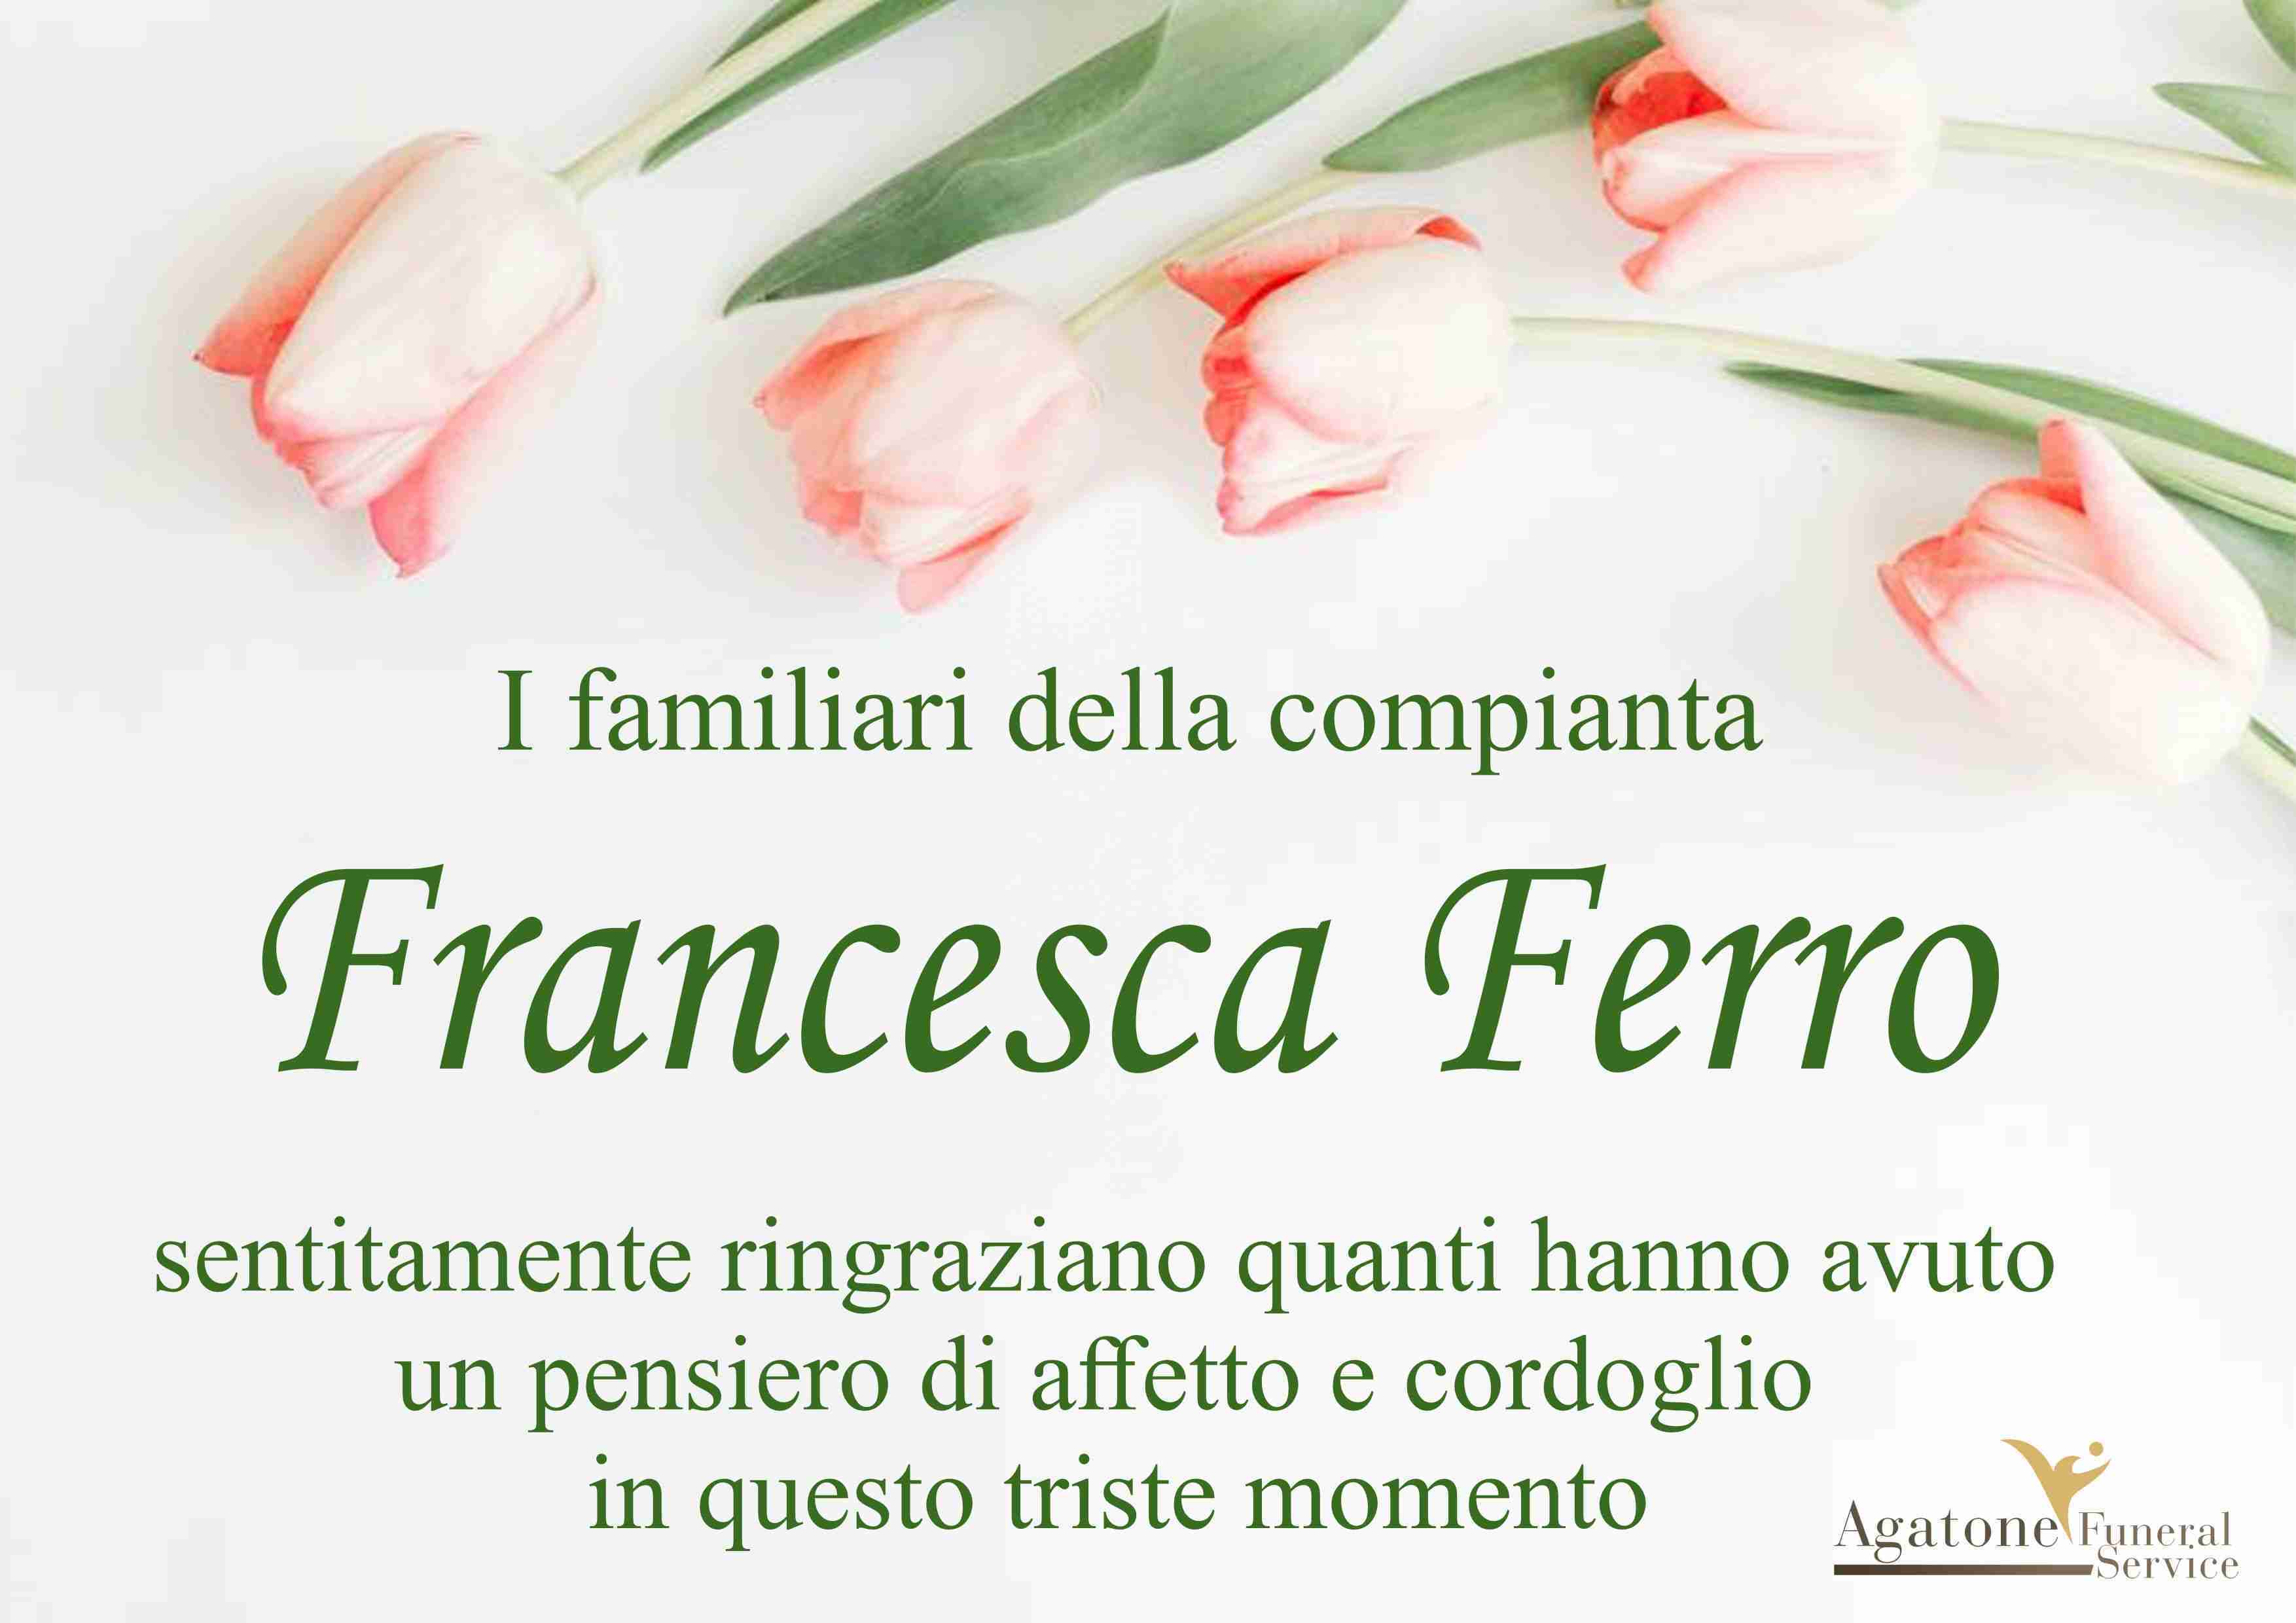 Francesca Ferro